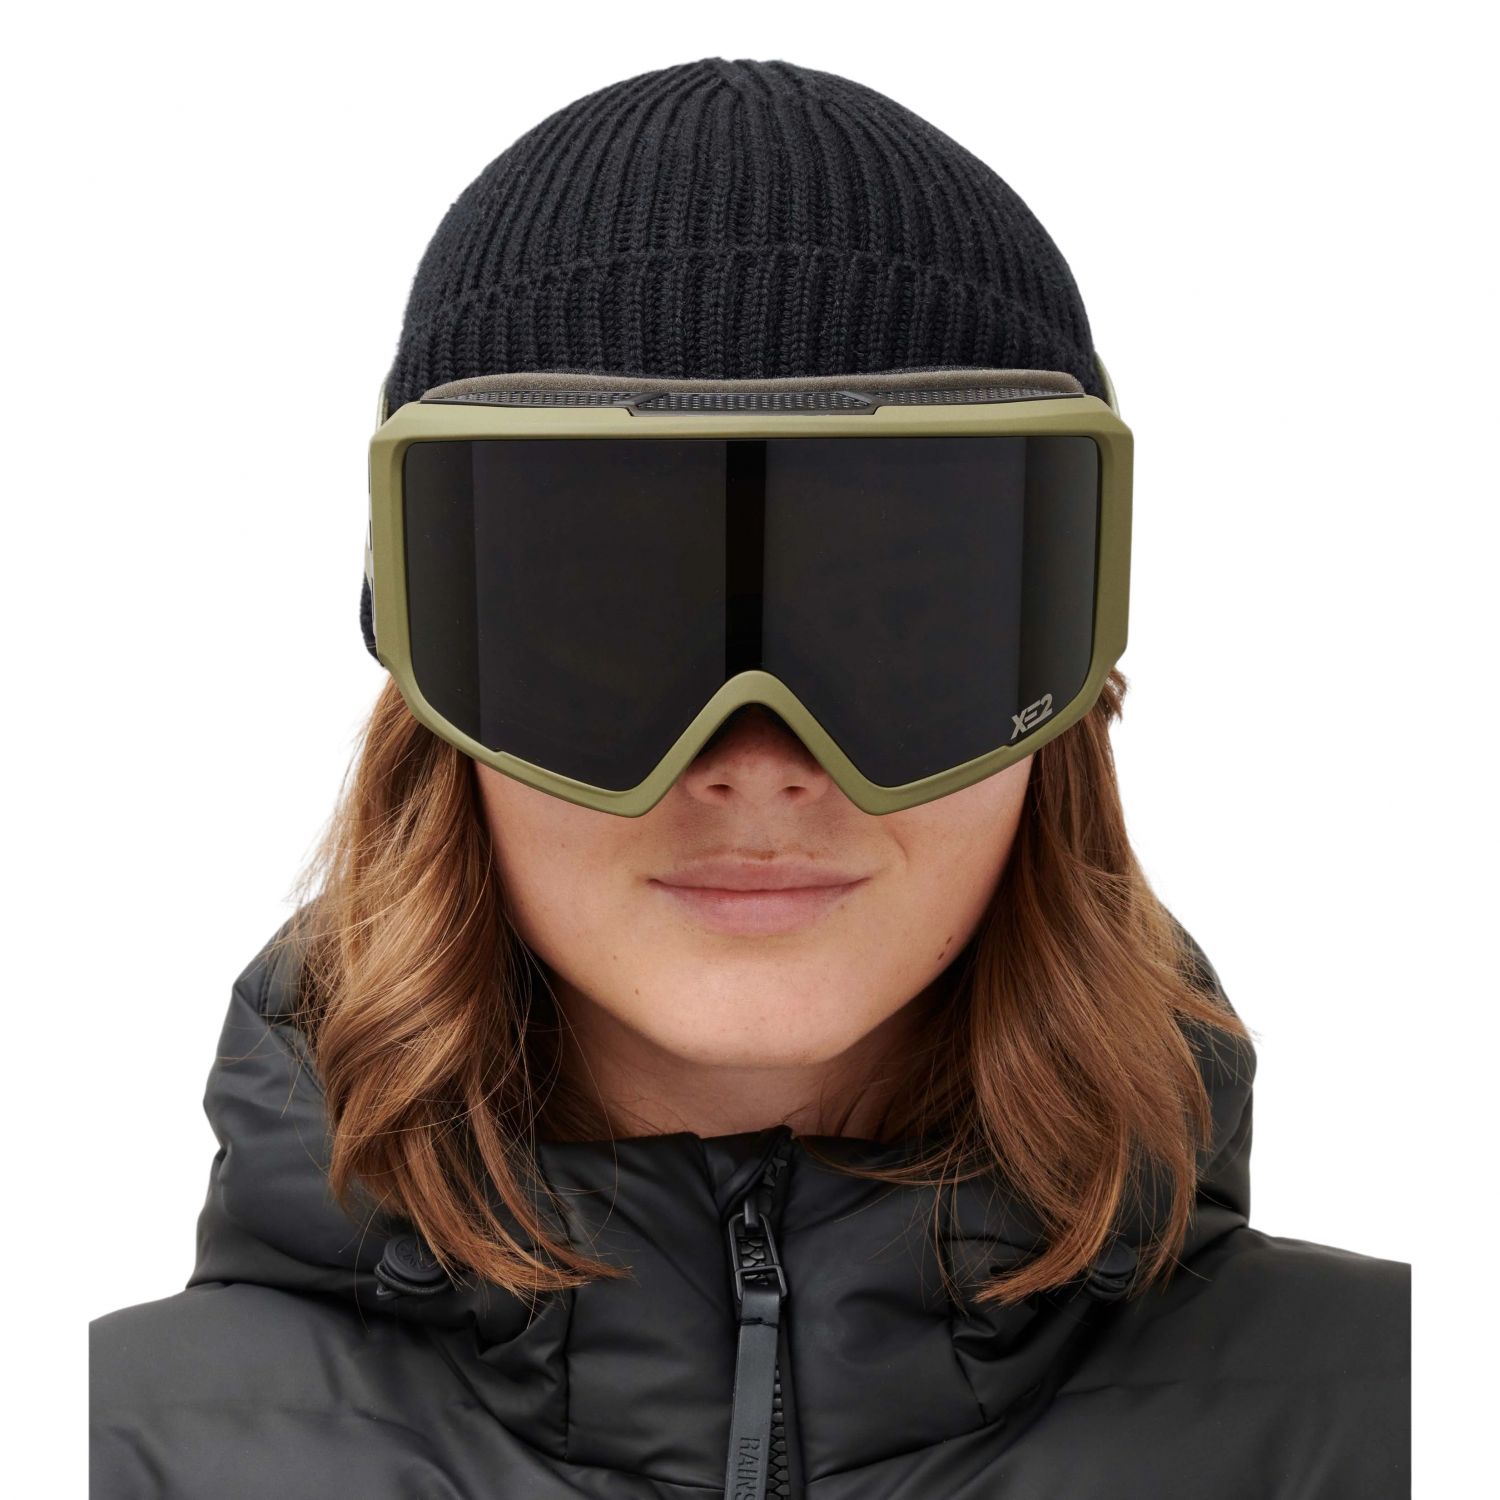 MessyWeekend Flip XE2, ski goggles, army